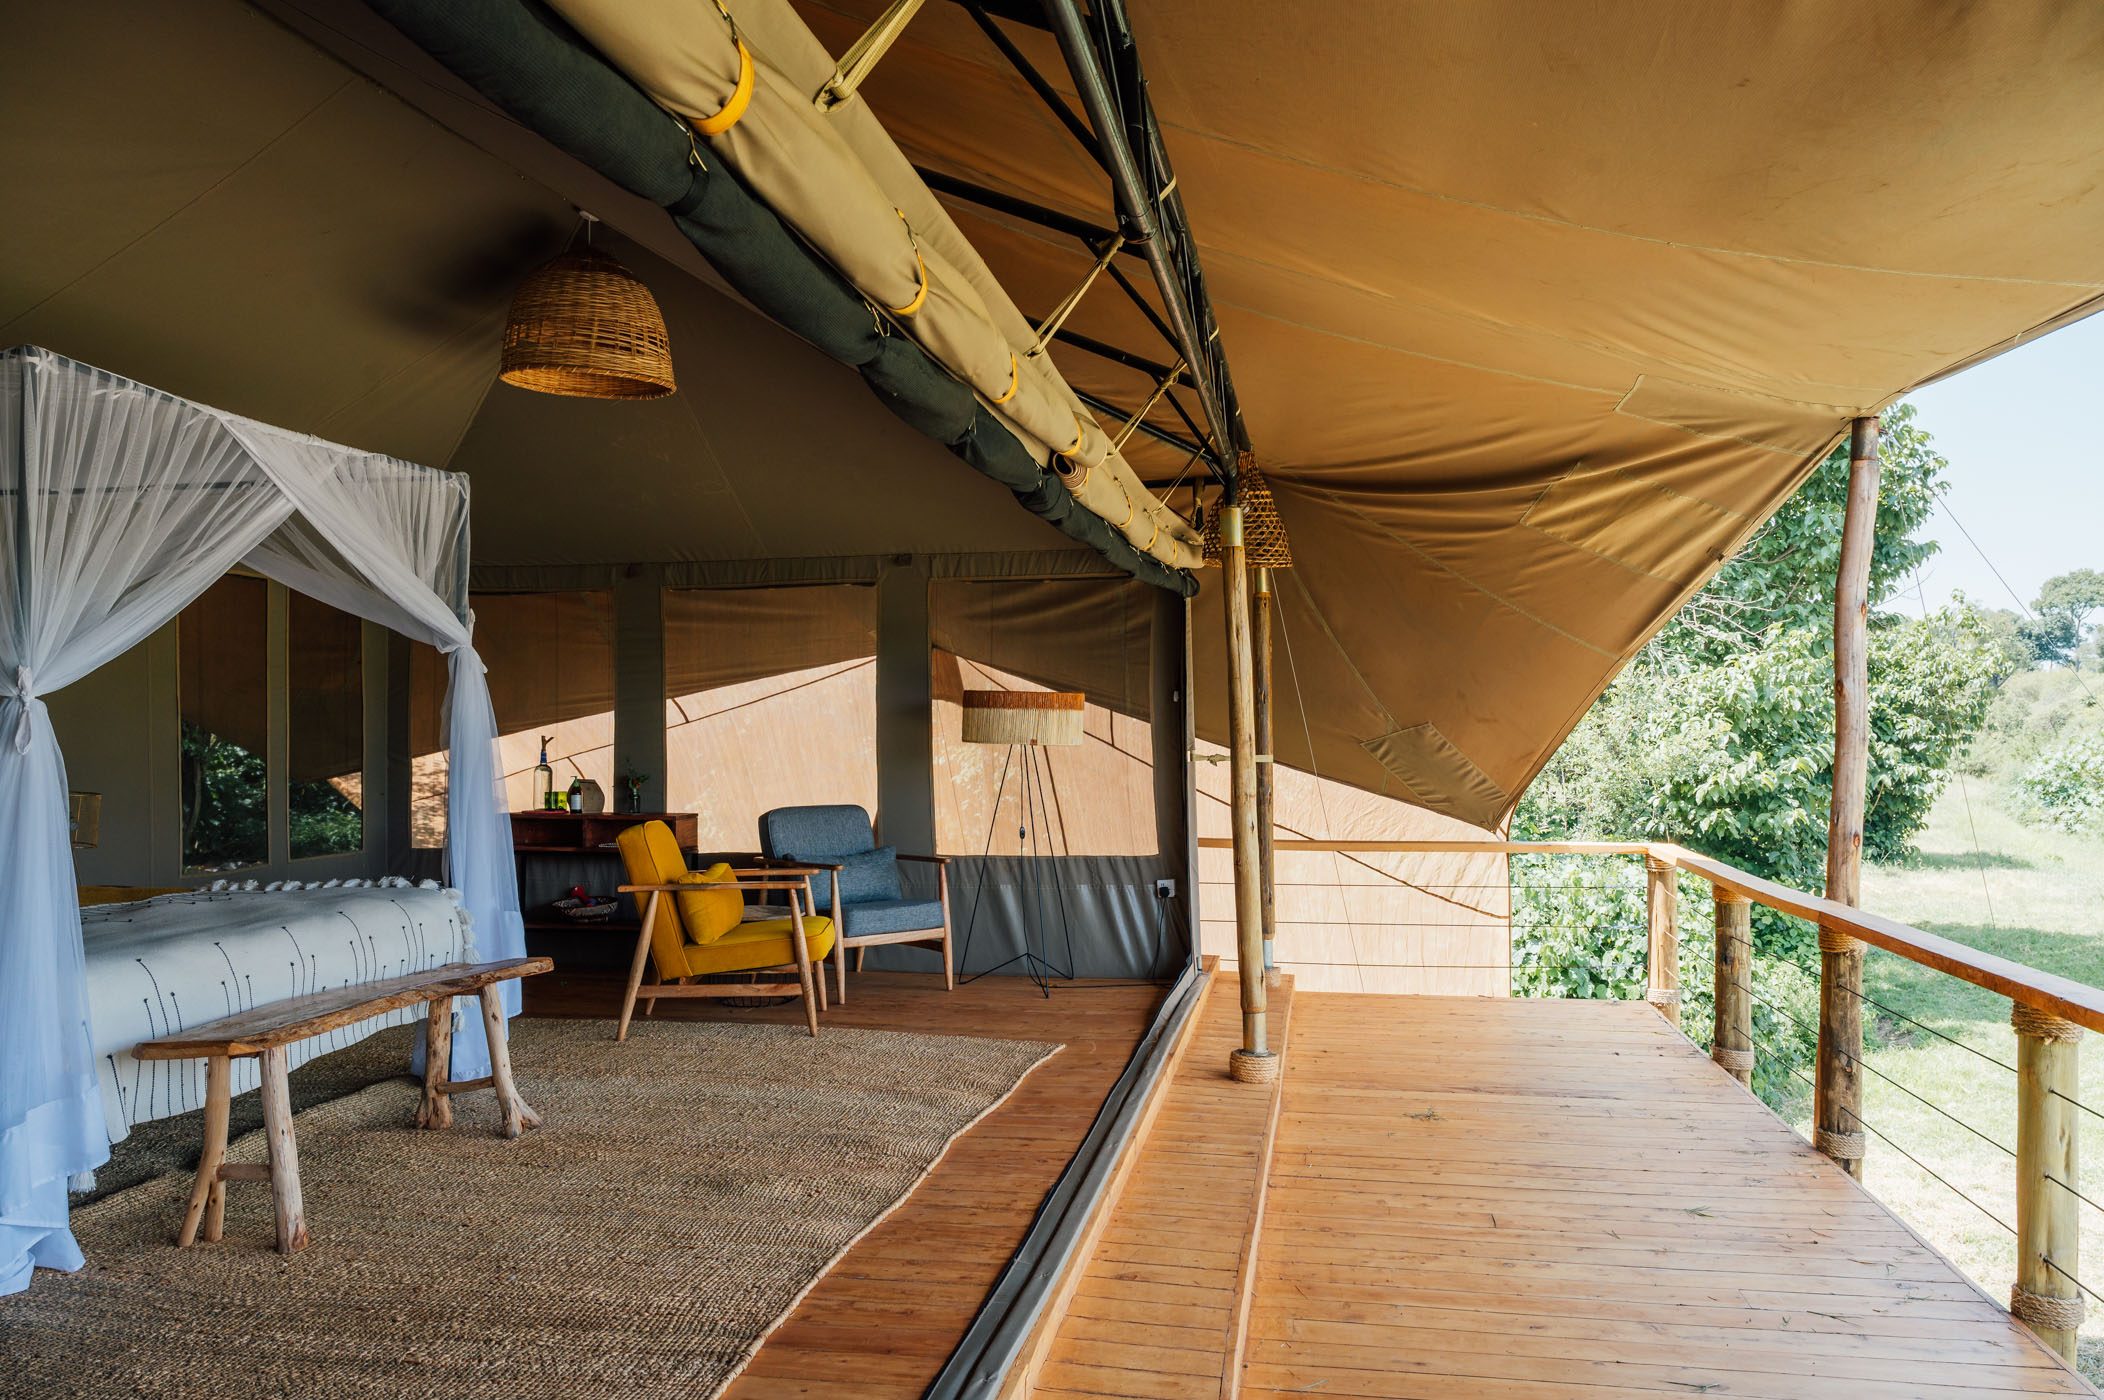 Eco luxury safari in Kenya's Maasai Mara with Emboo River Camp